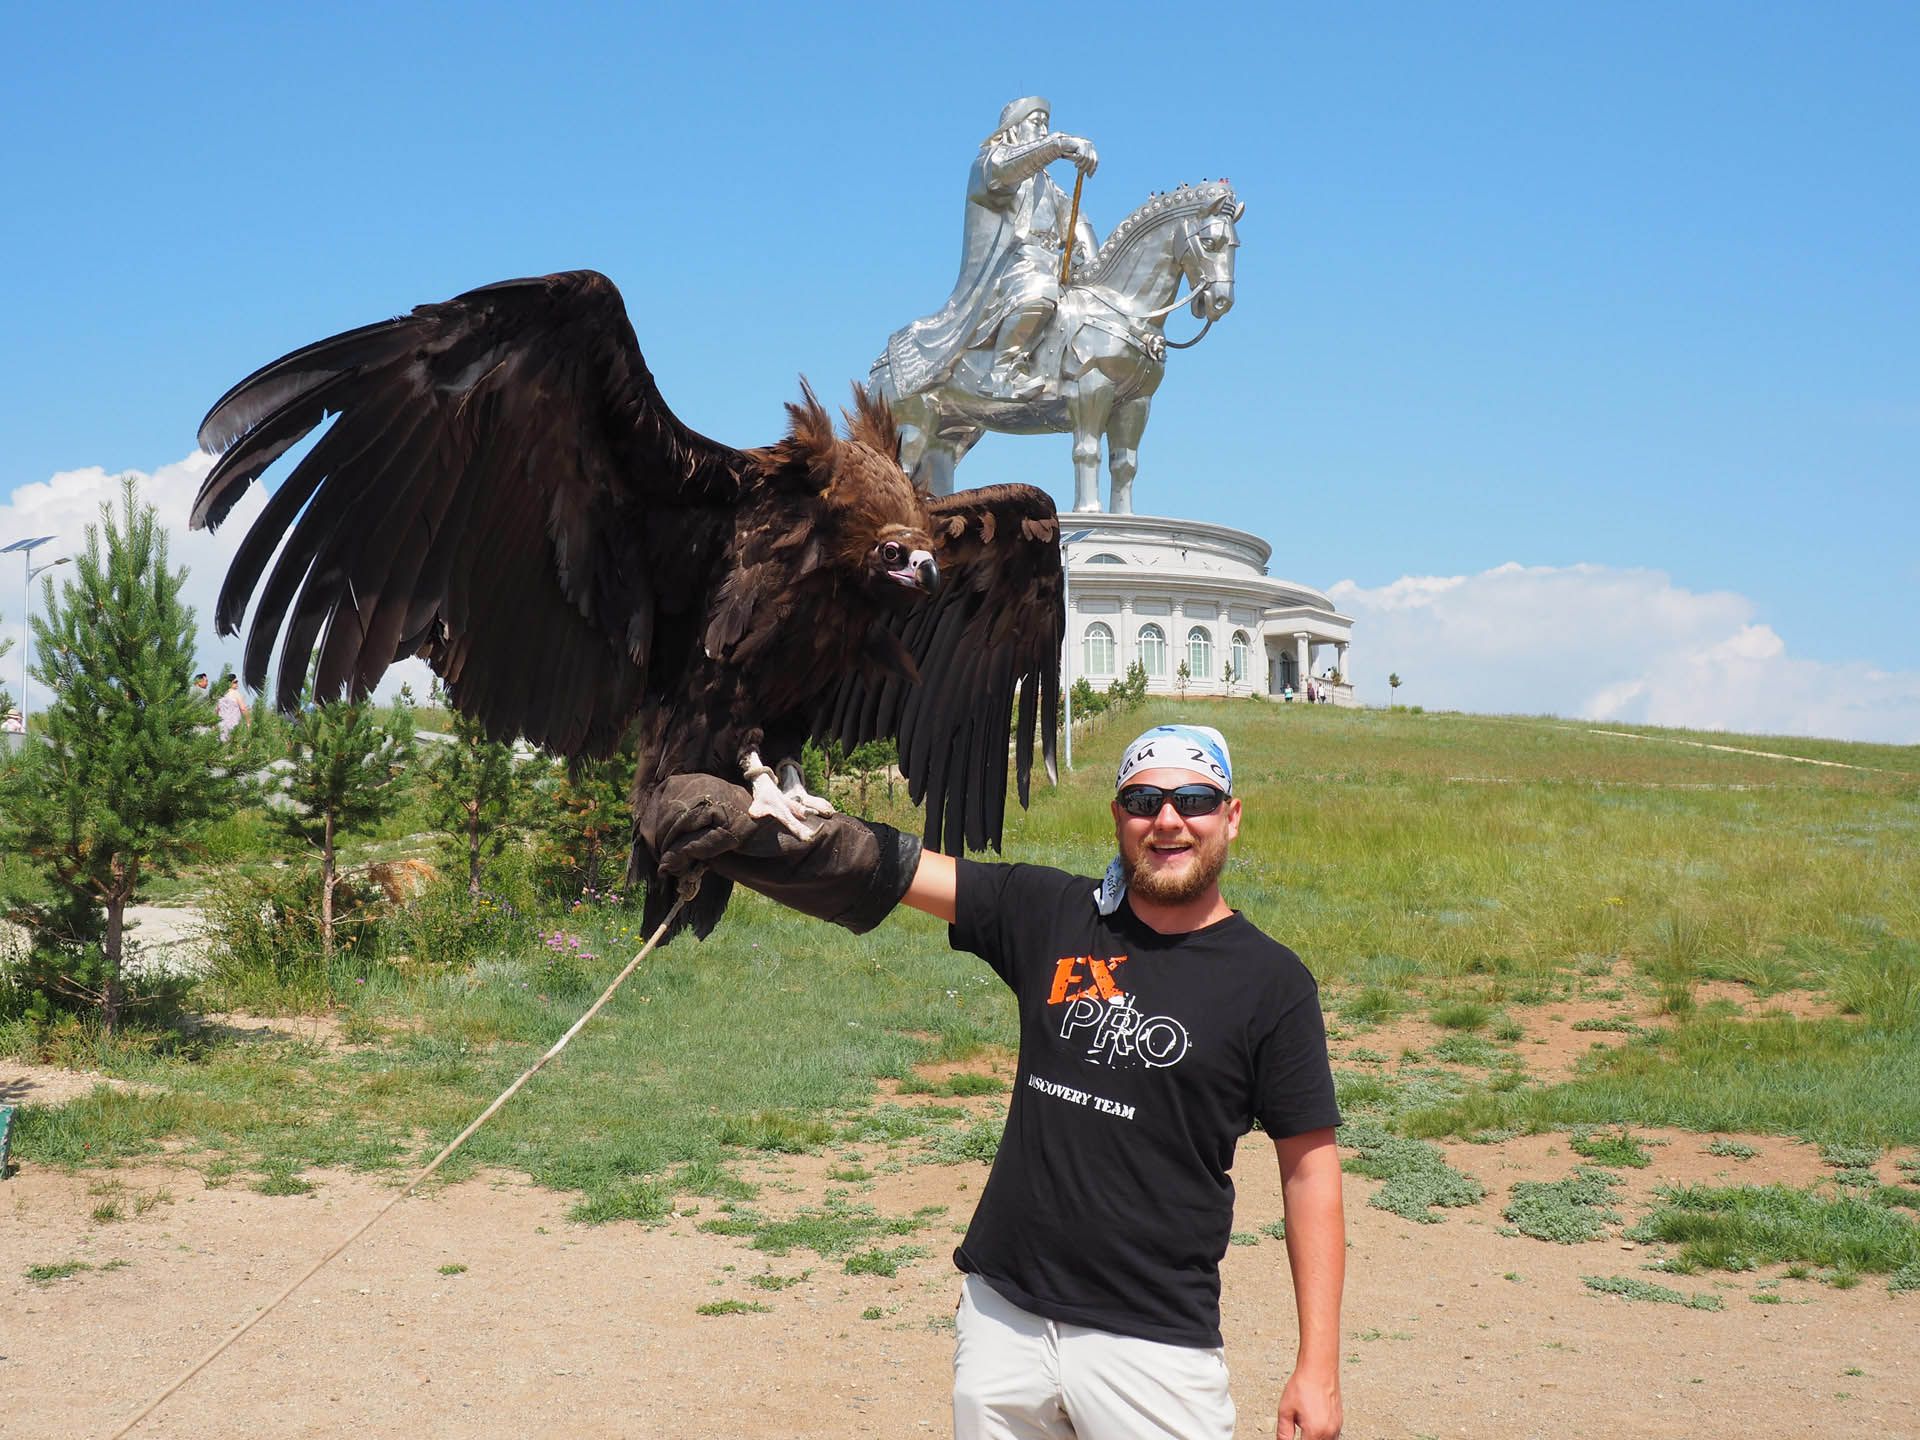 Golden eagles in Mongolia